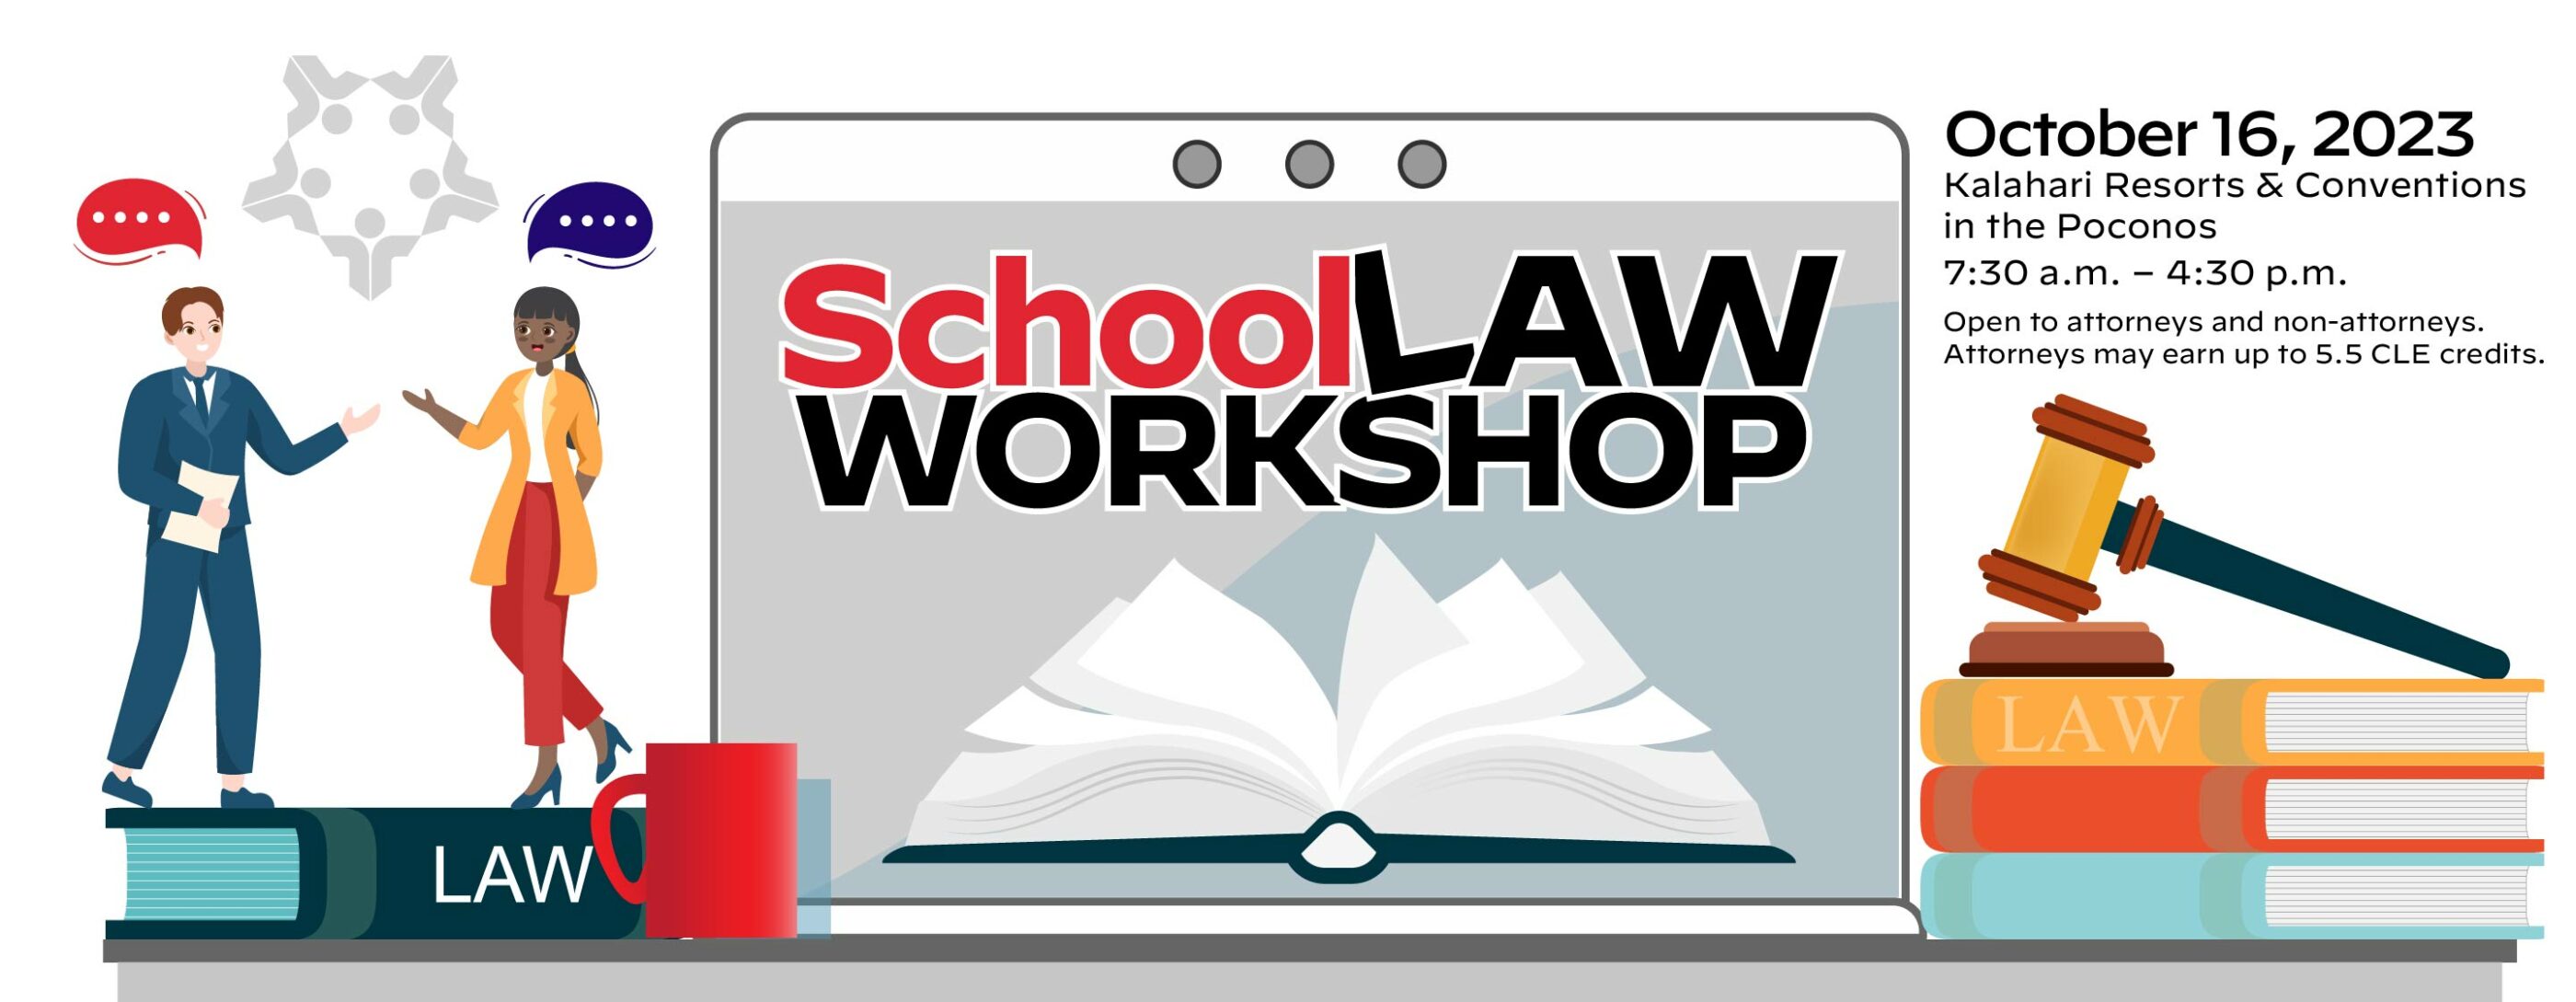 School Law Workshop, October 16